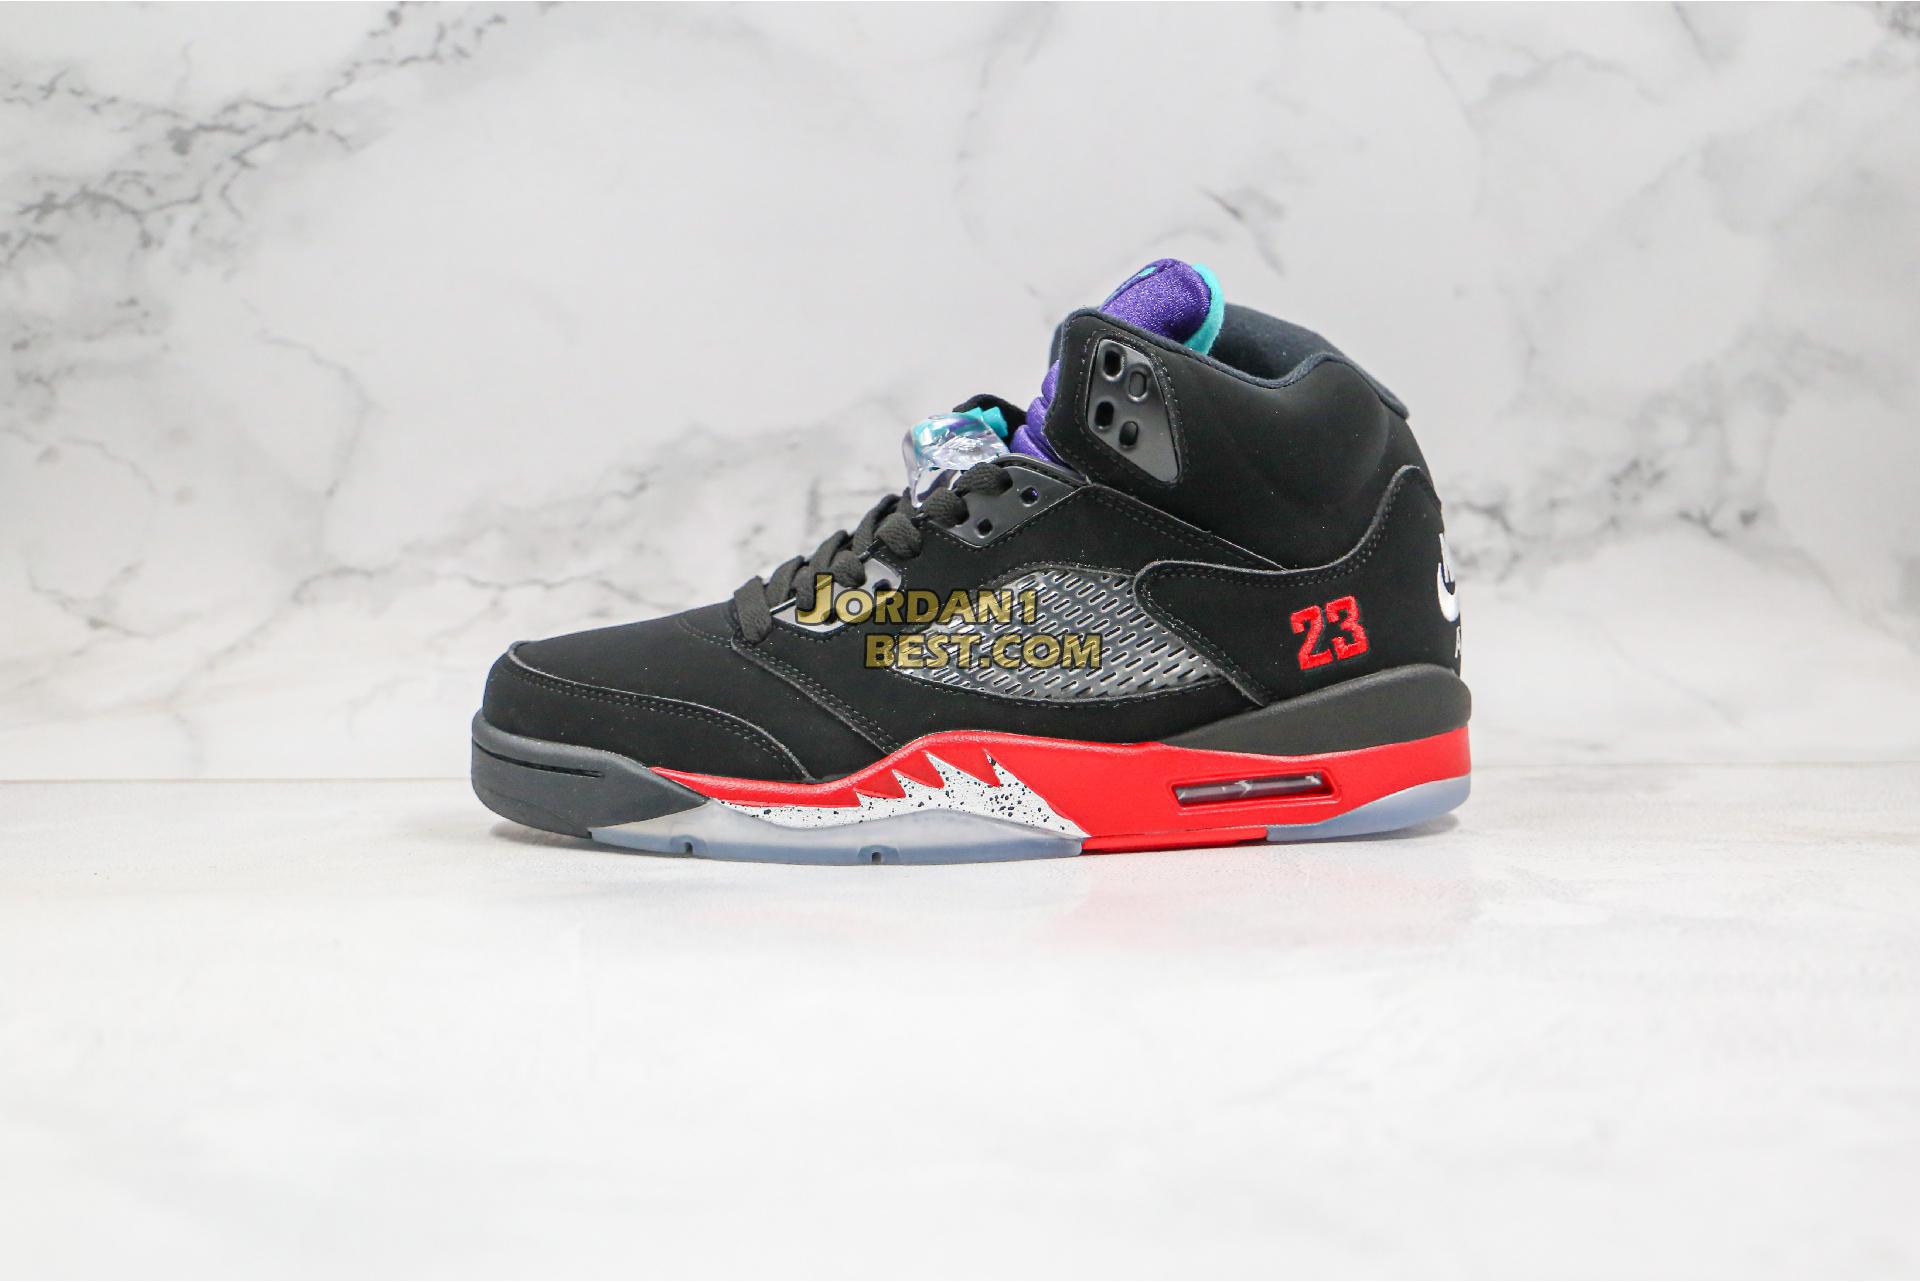 new replicas Air Jordan 5 Retro "Top 3" CZ1786-001 Mens Womens black/new emerald-fire red Shoes